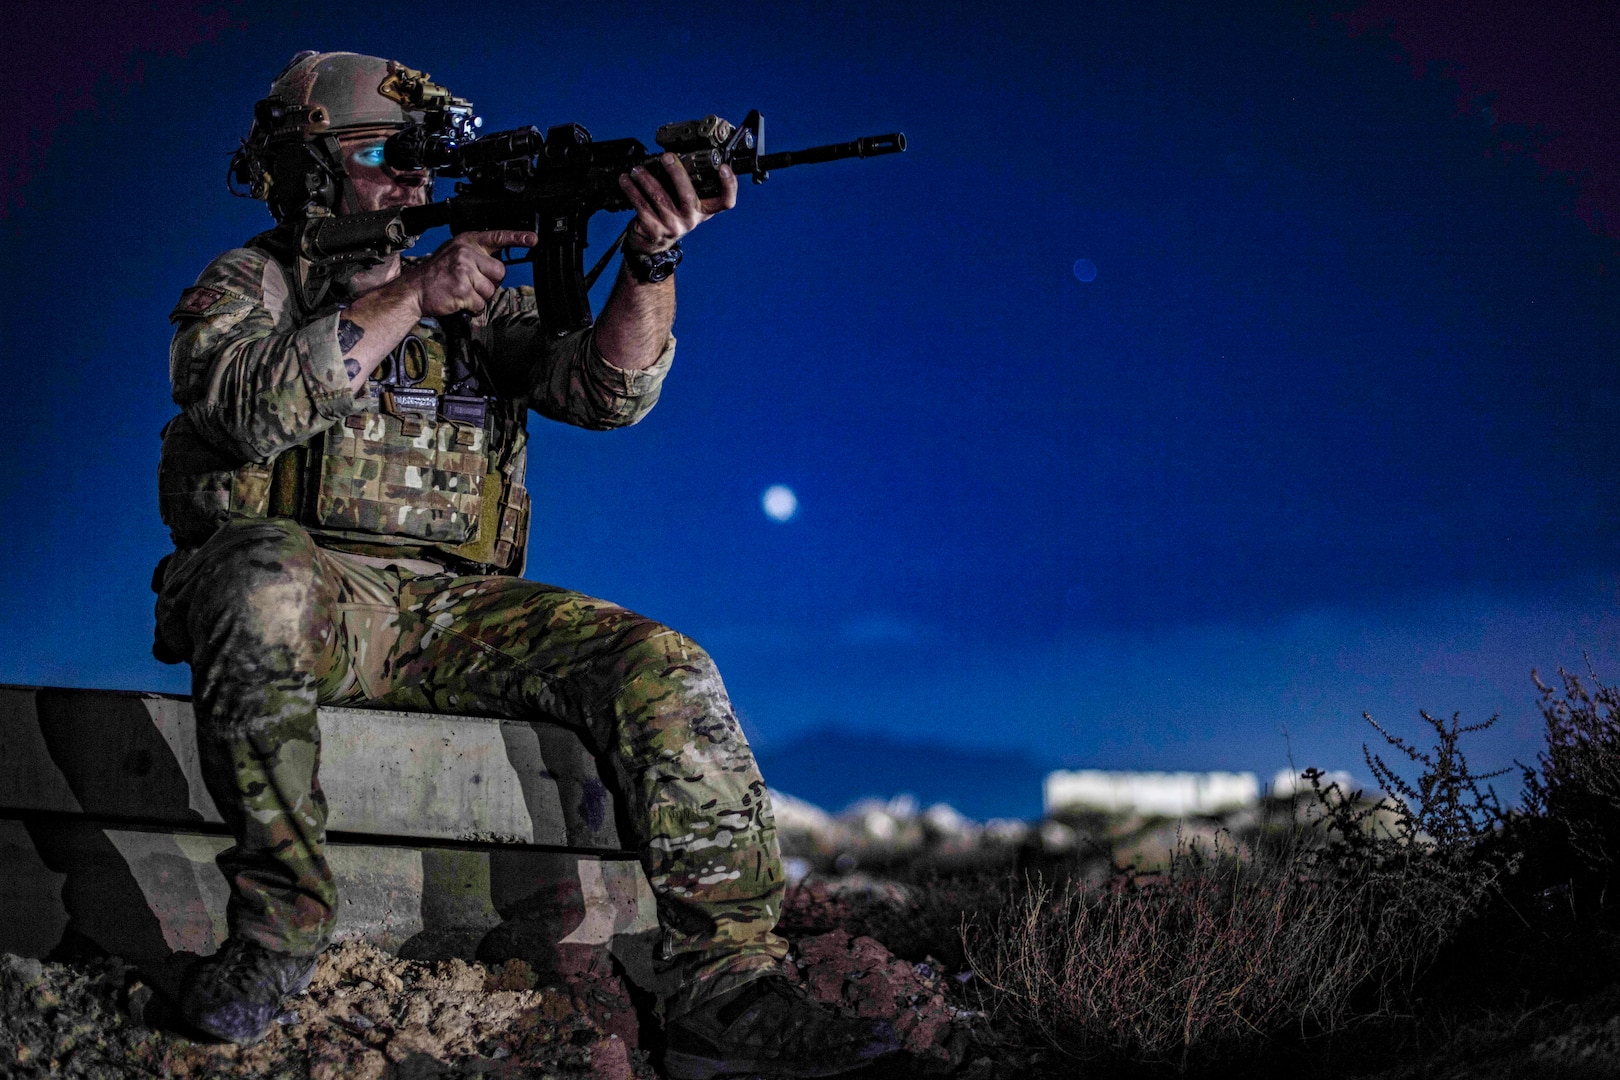 An airman sits on a ledge and aims a rifle against a deep blue, moonlit sky.